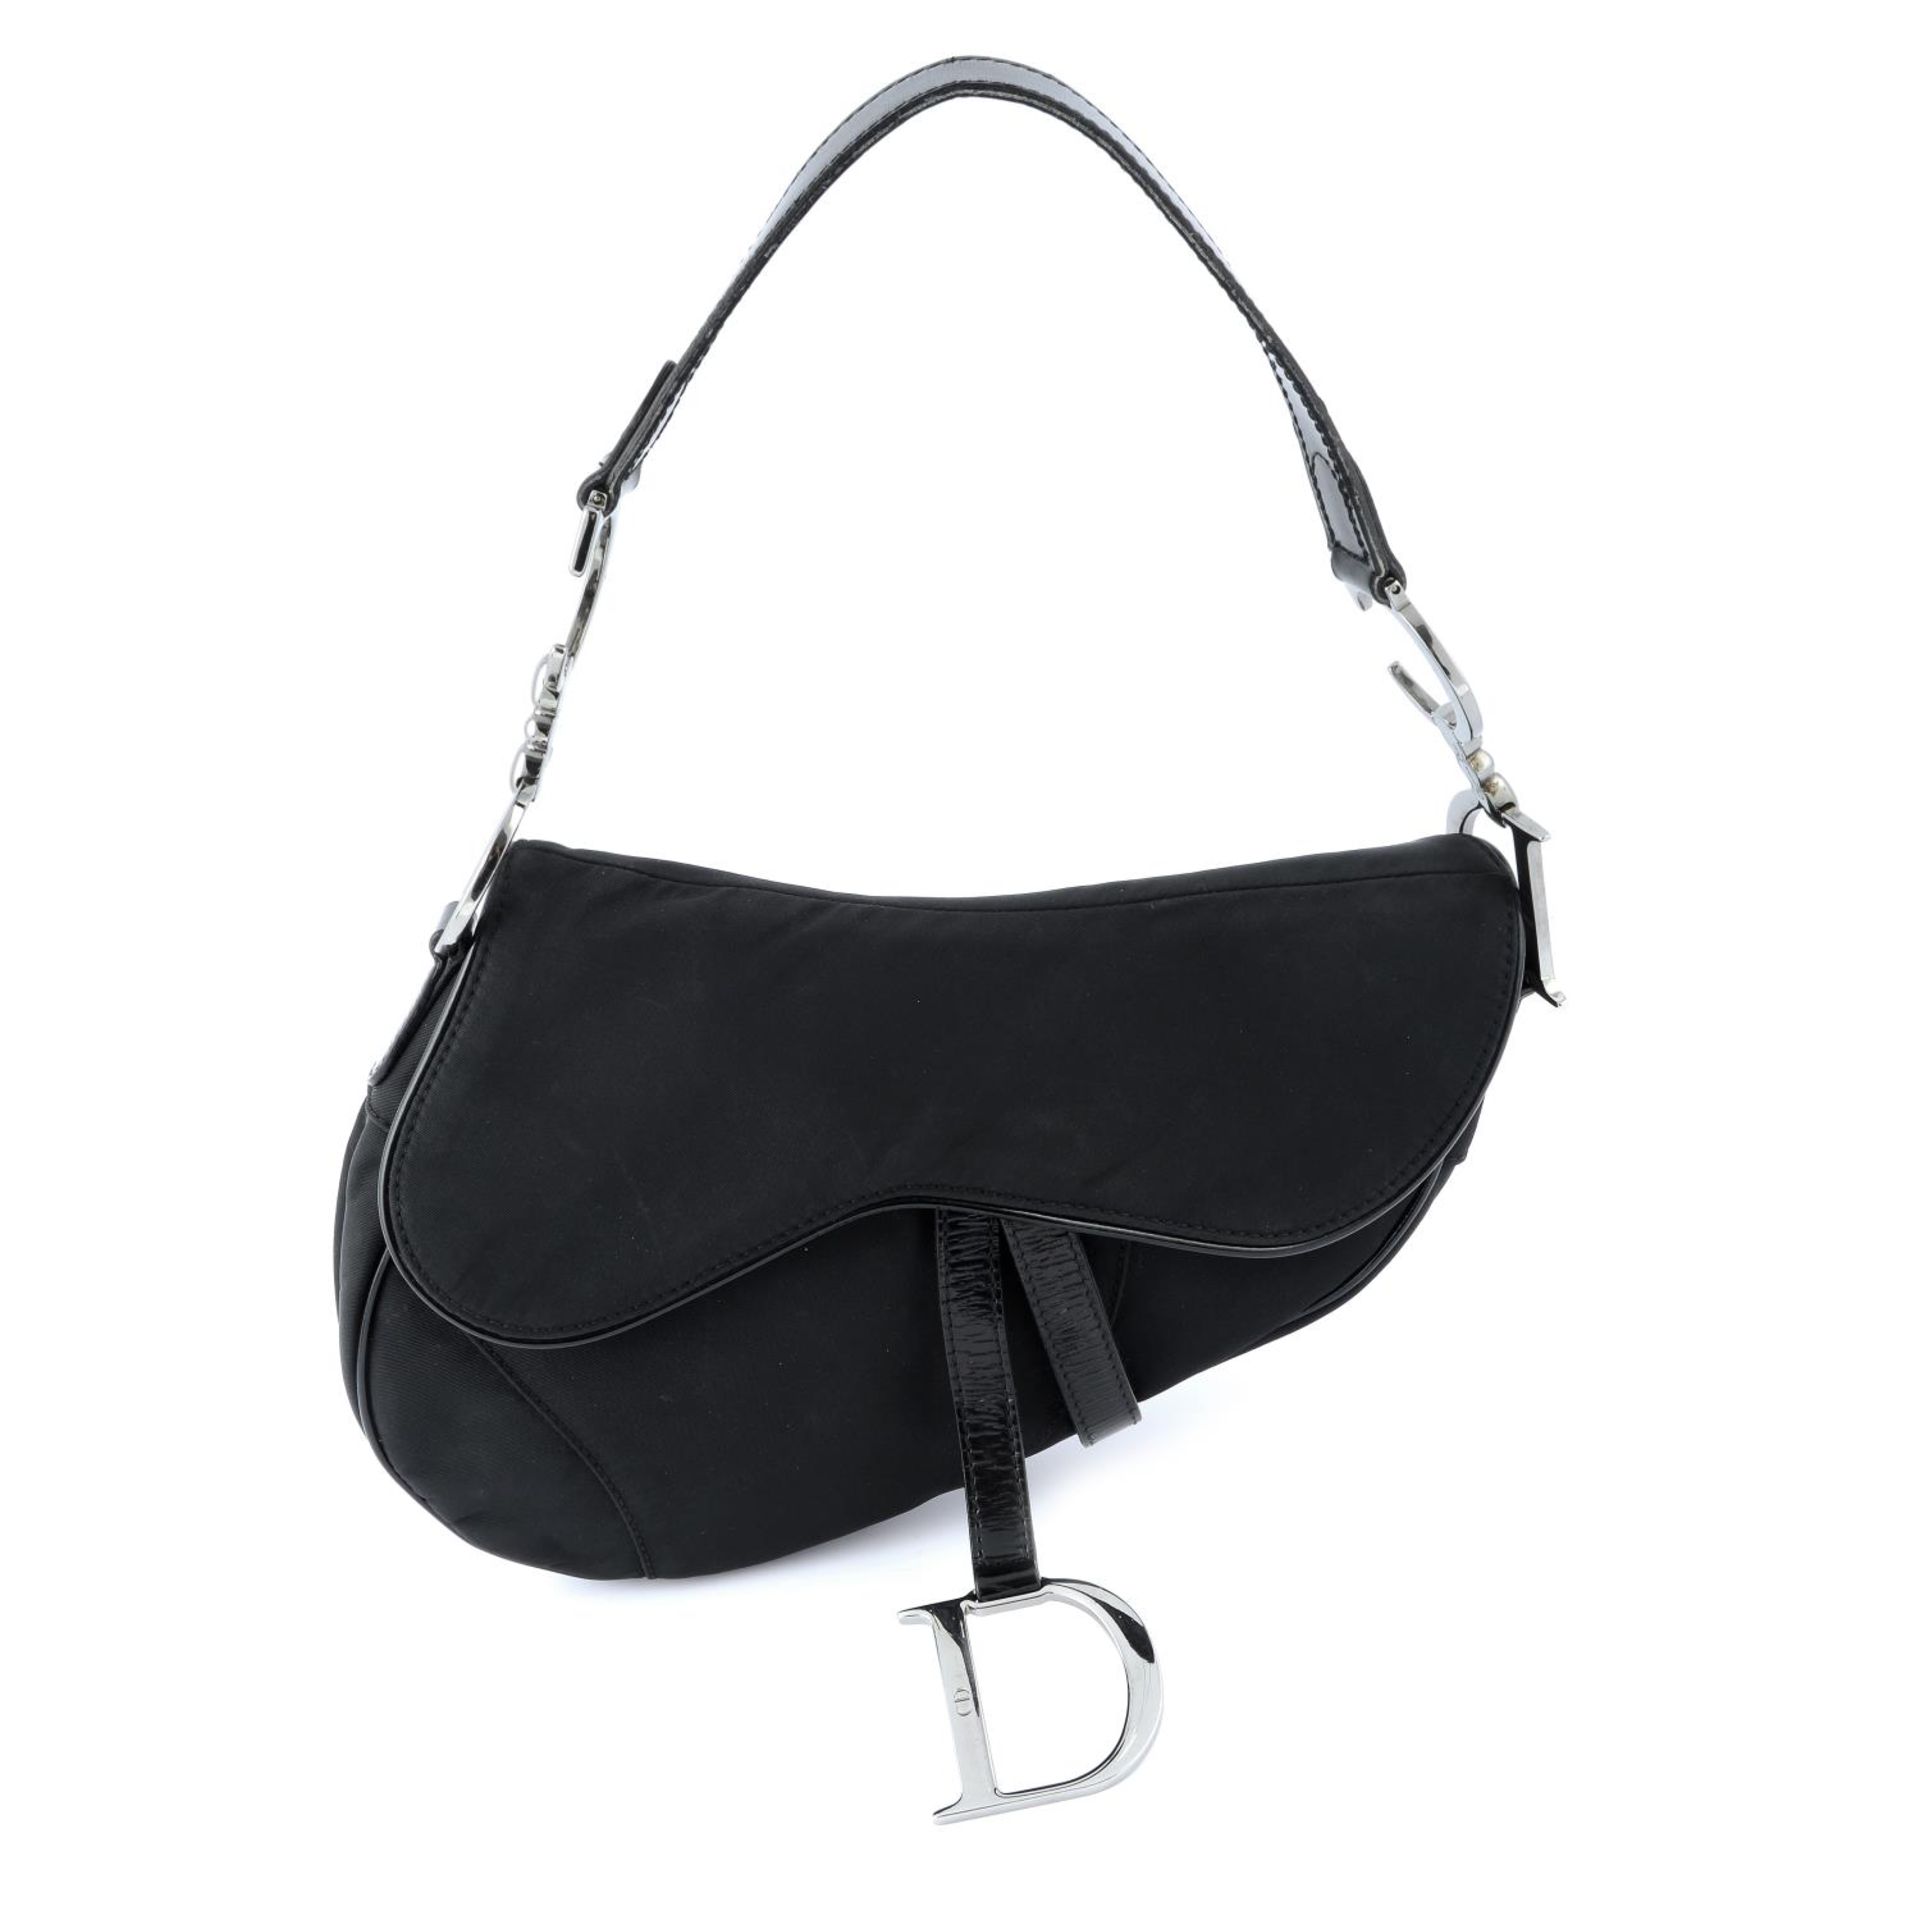 CHRISTIAN DIOR - a black nylon saddle handbag.